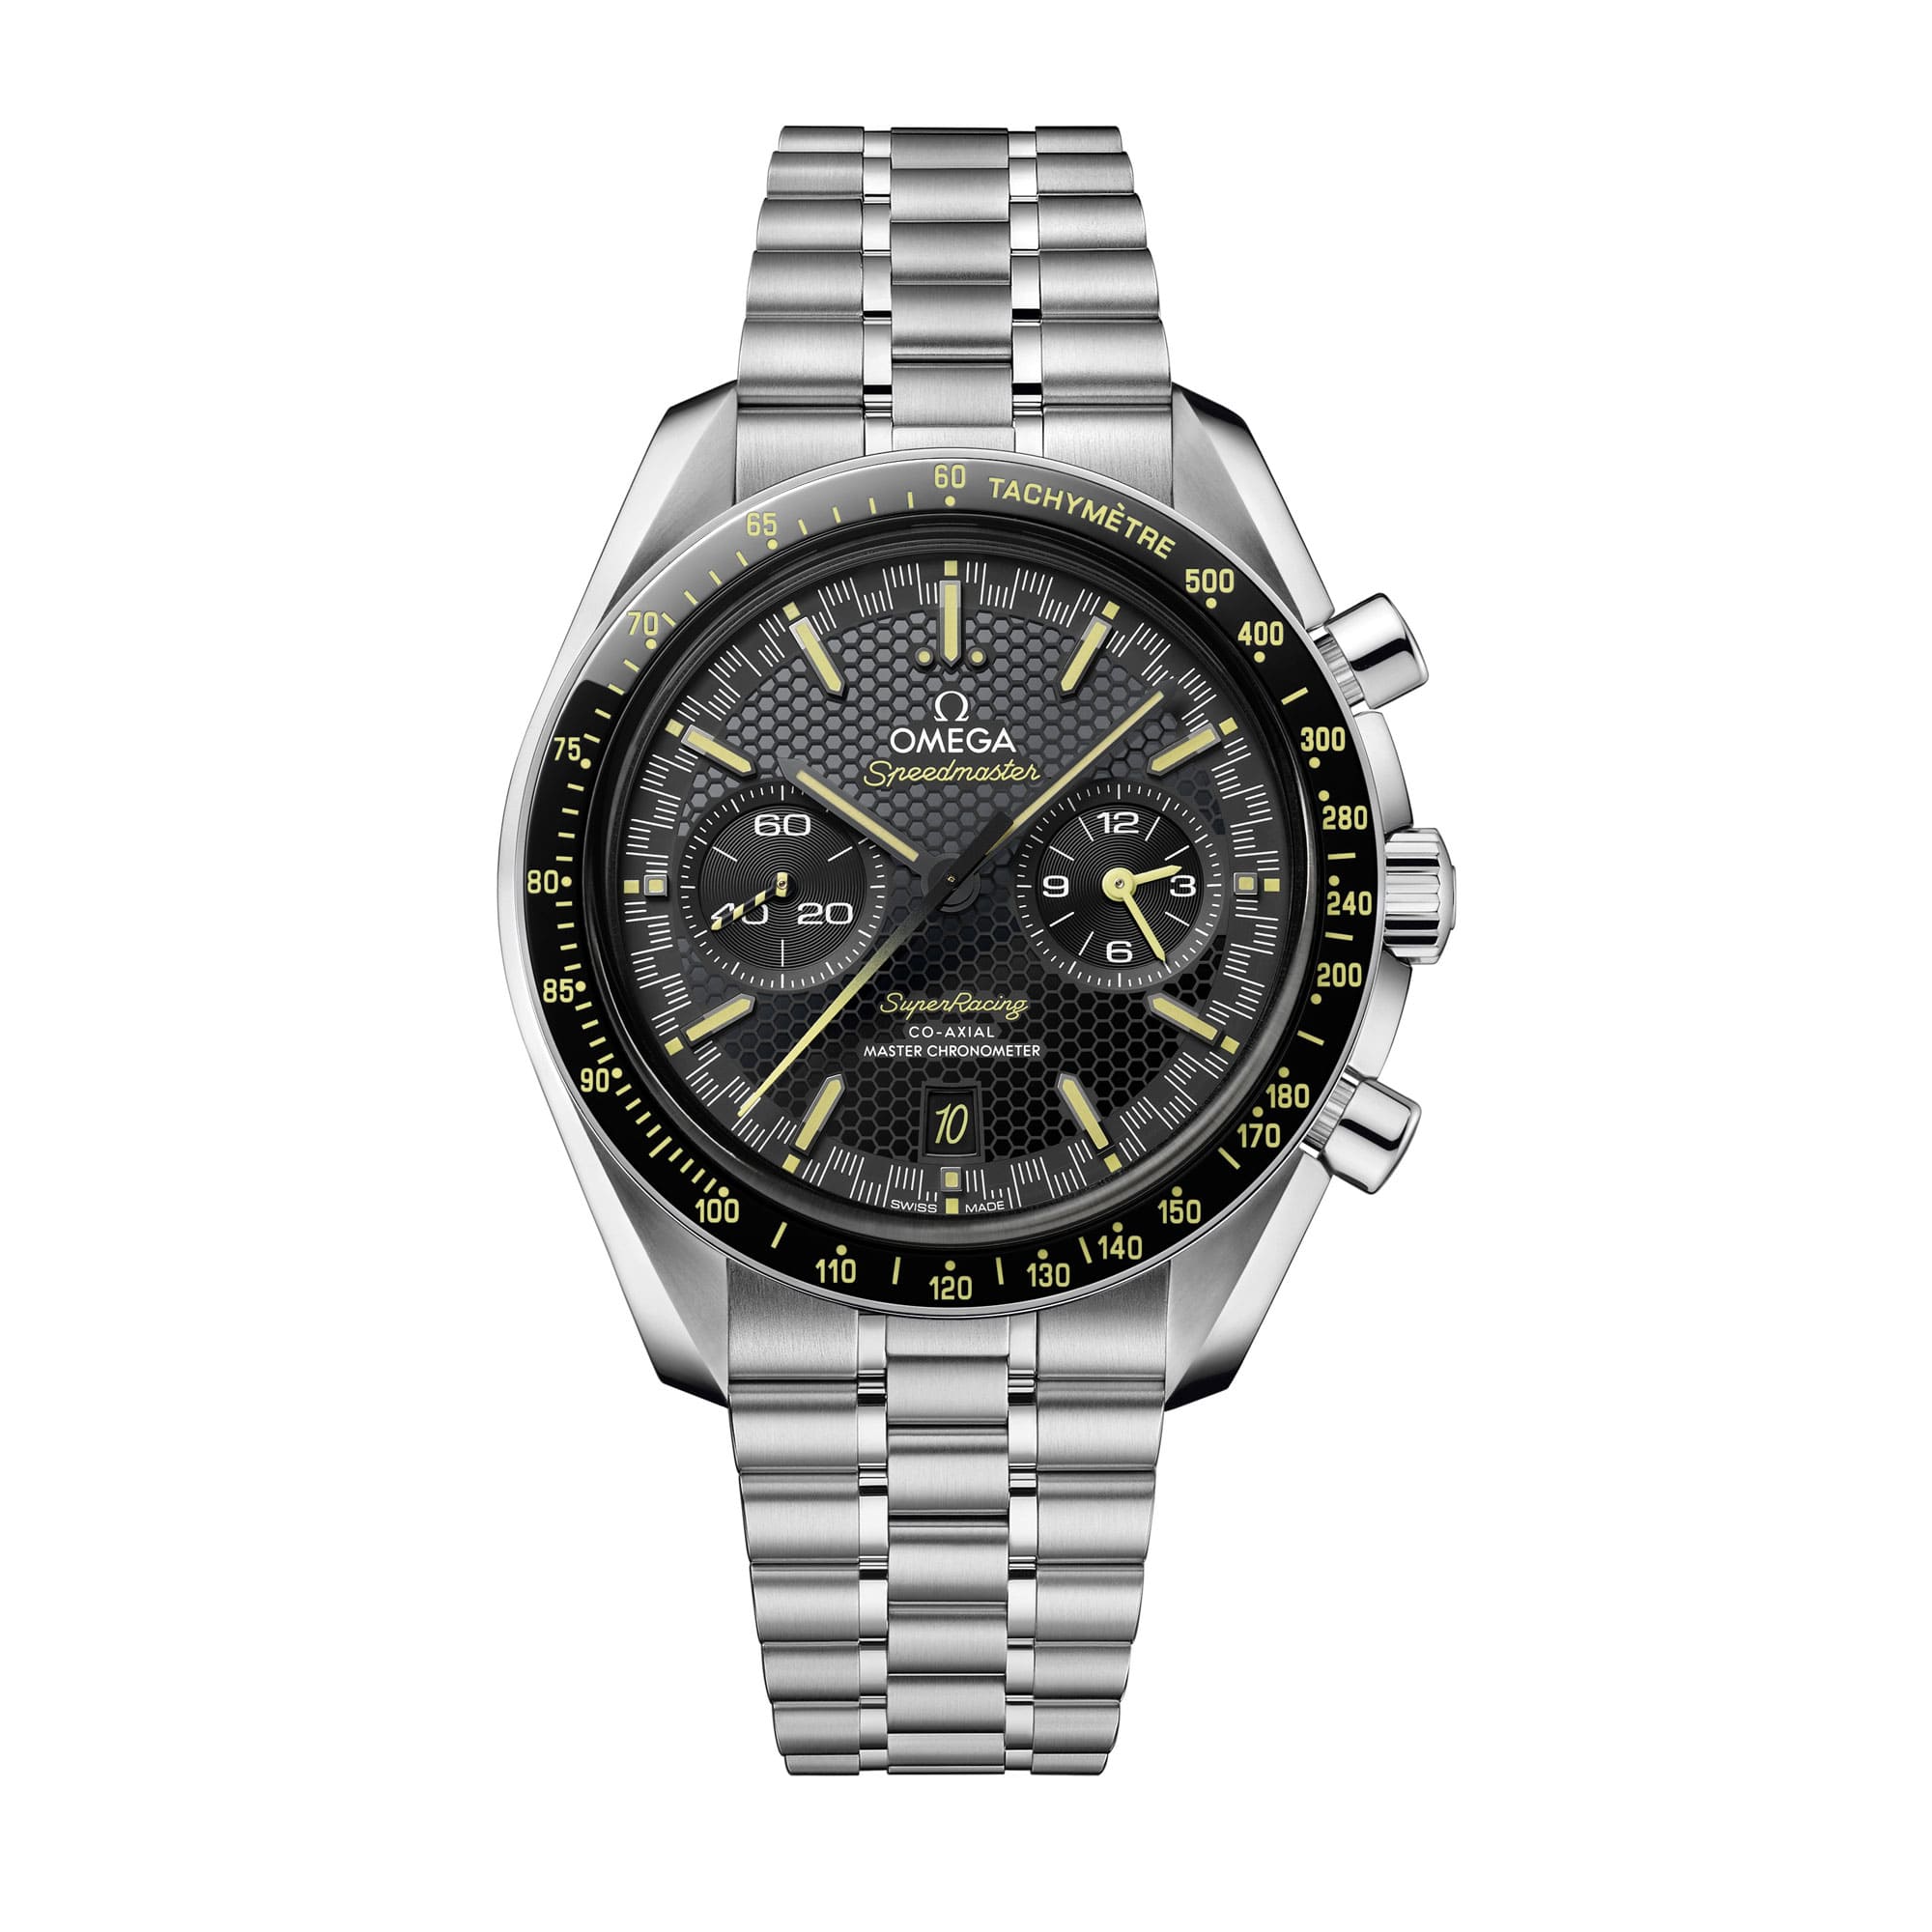 Super Racing Co-Axial Master Chronometer Chronograph 44